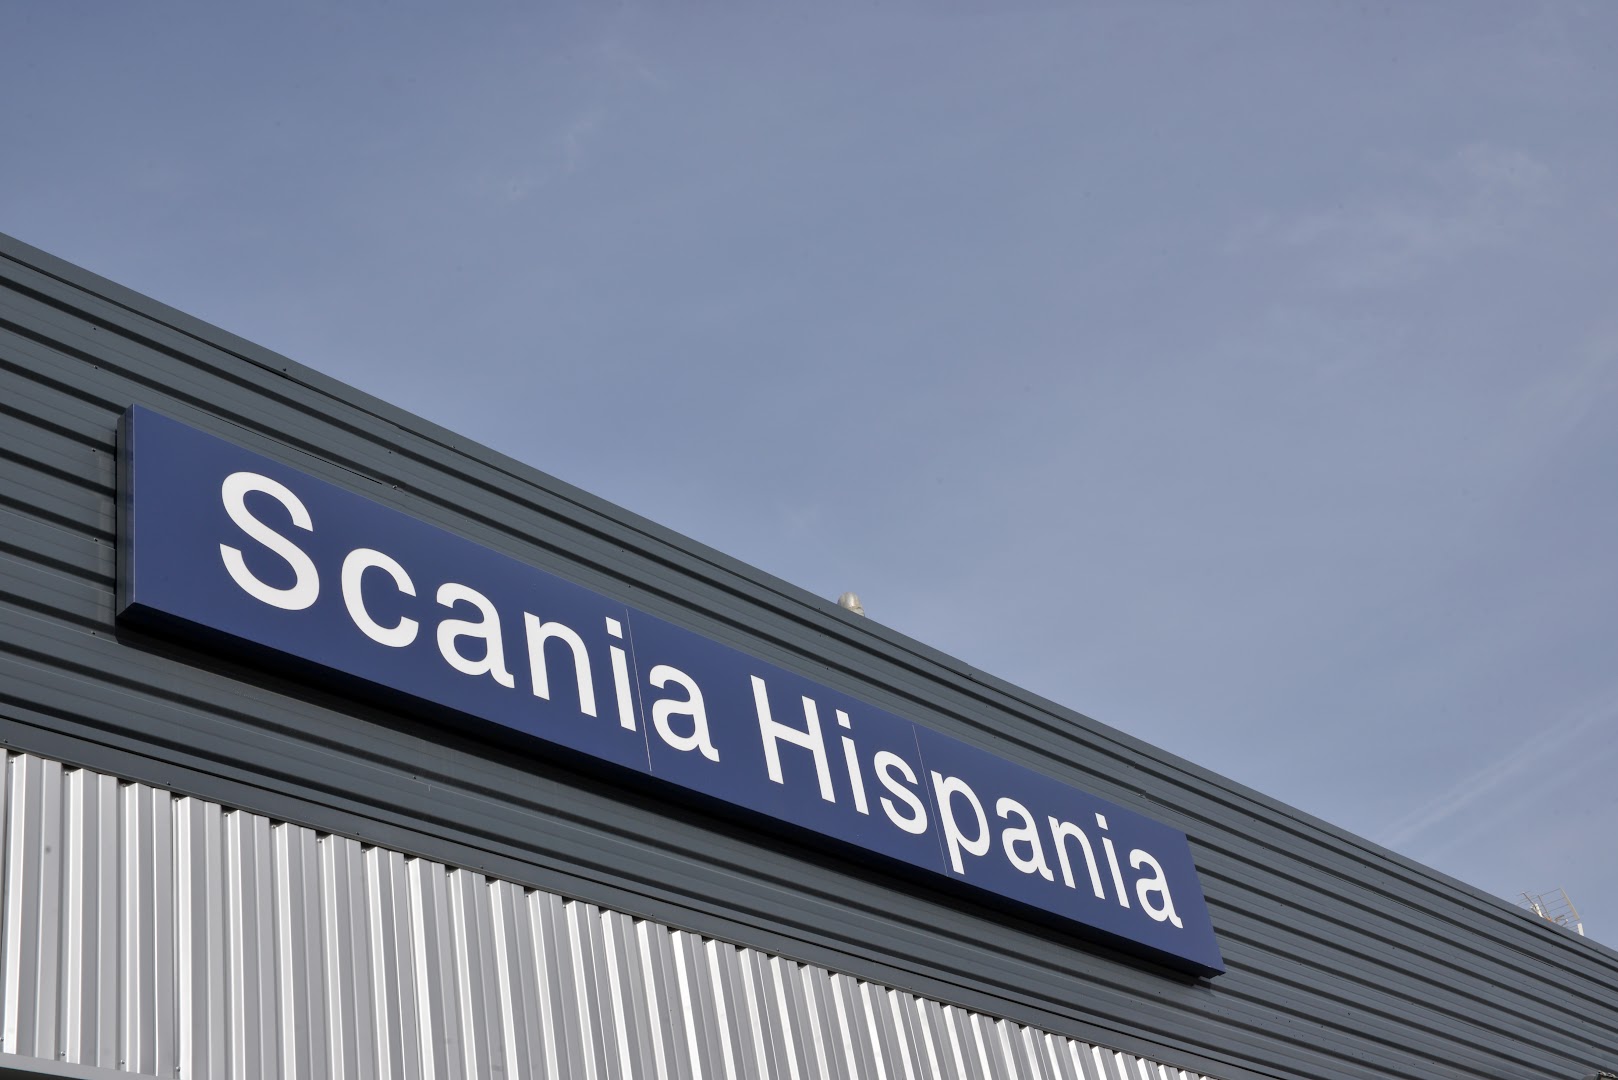 Scania Hispania SA